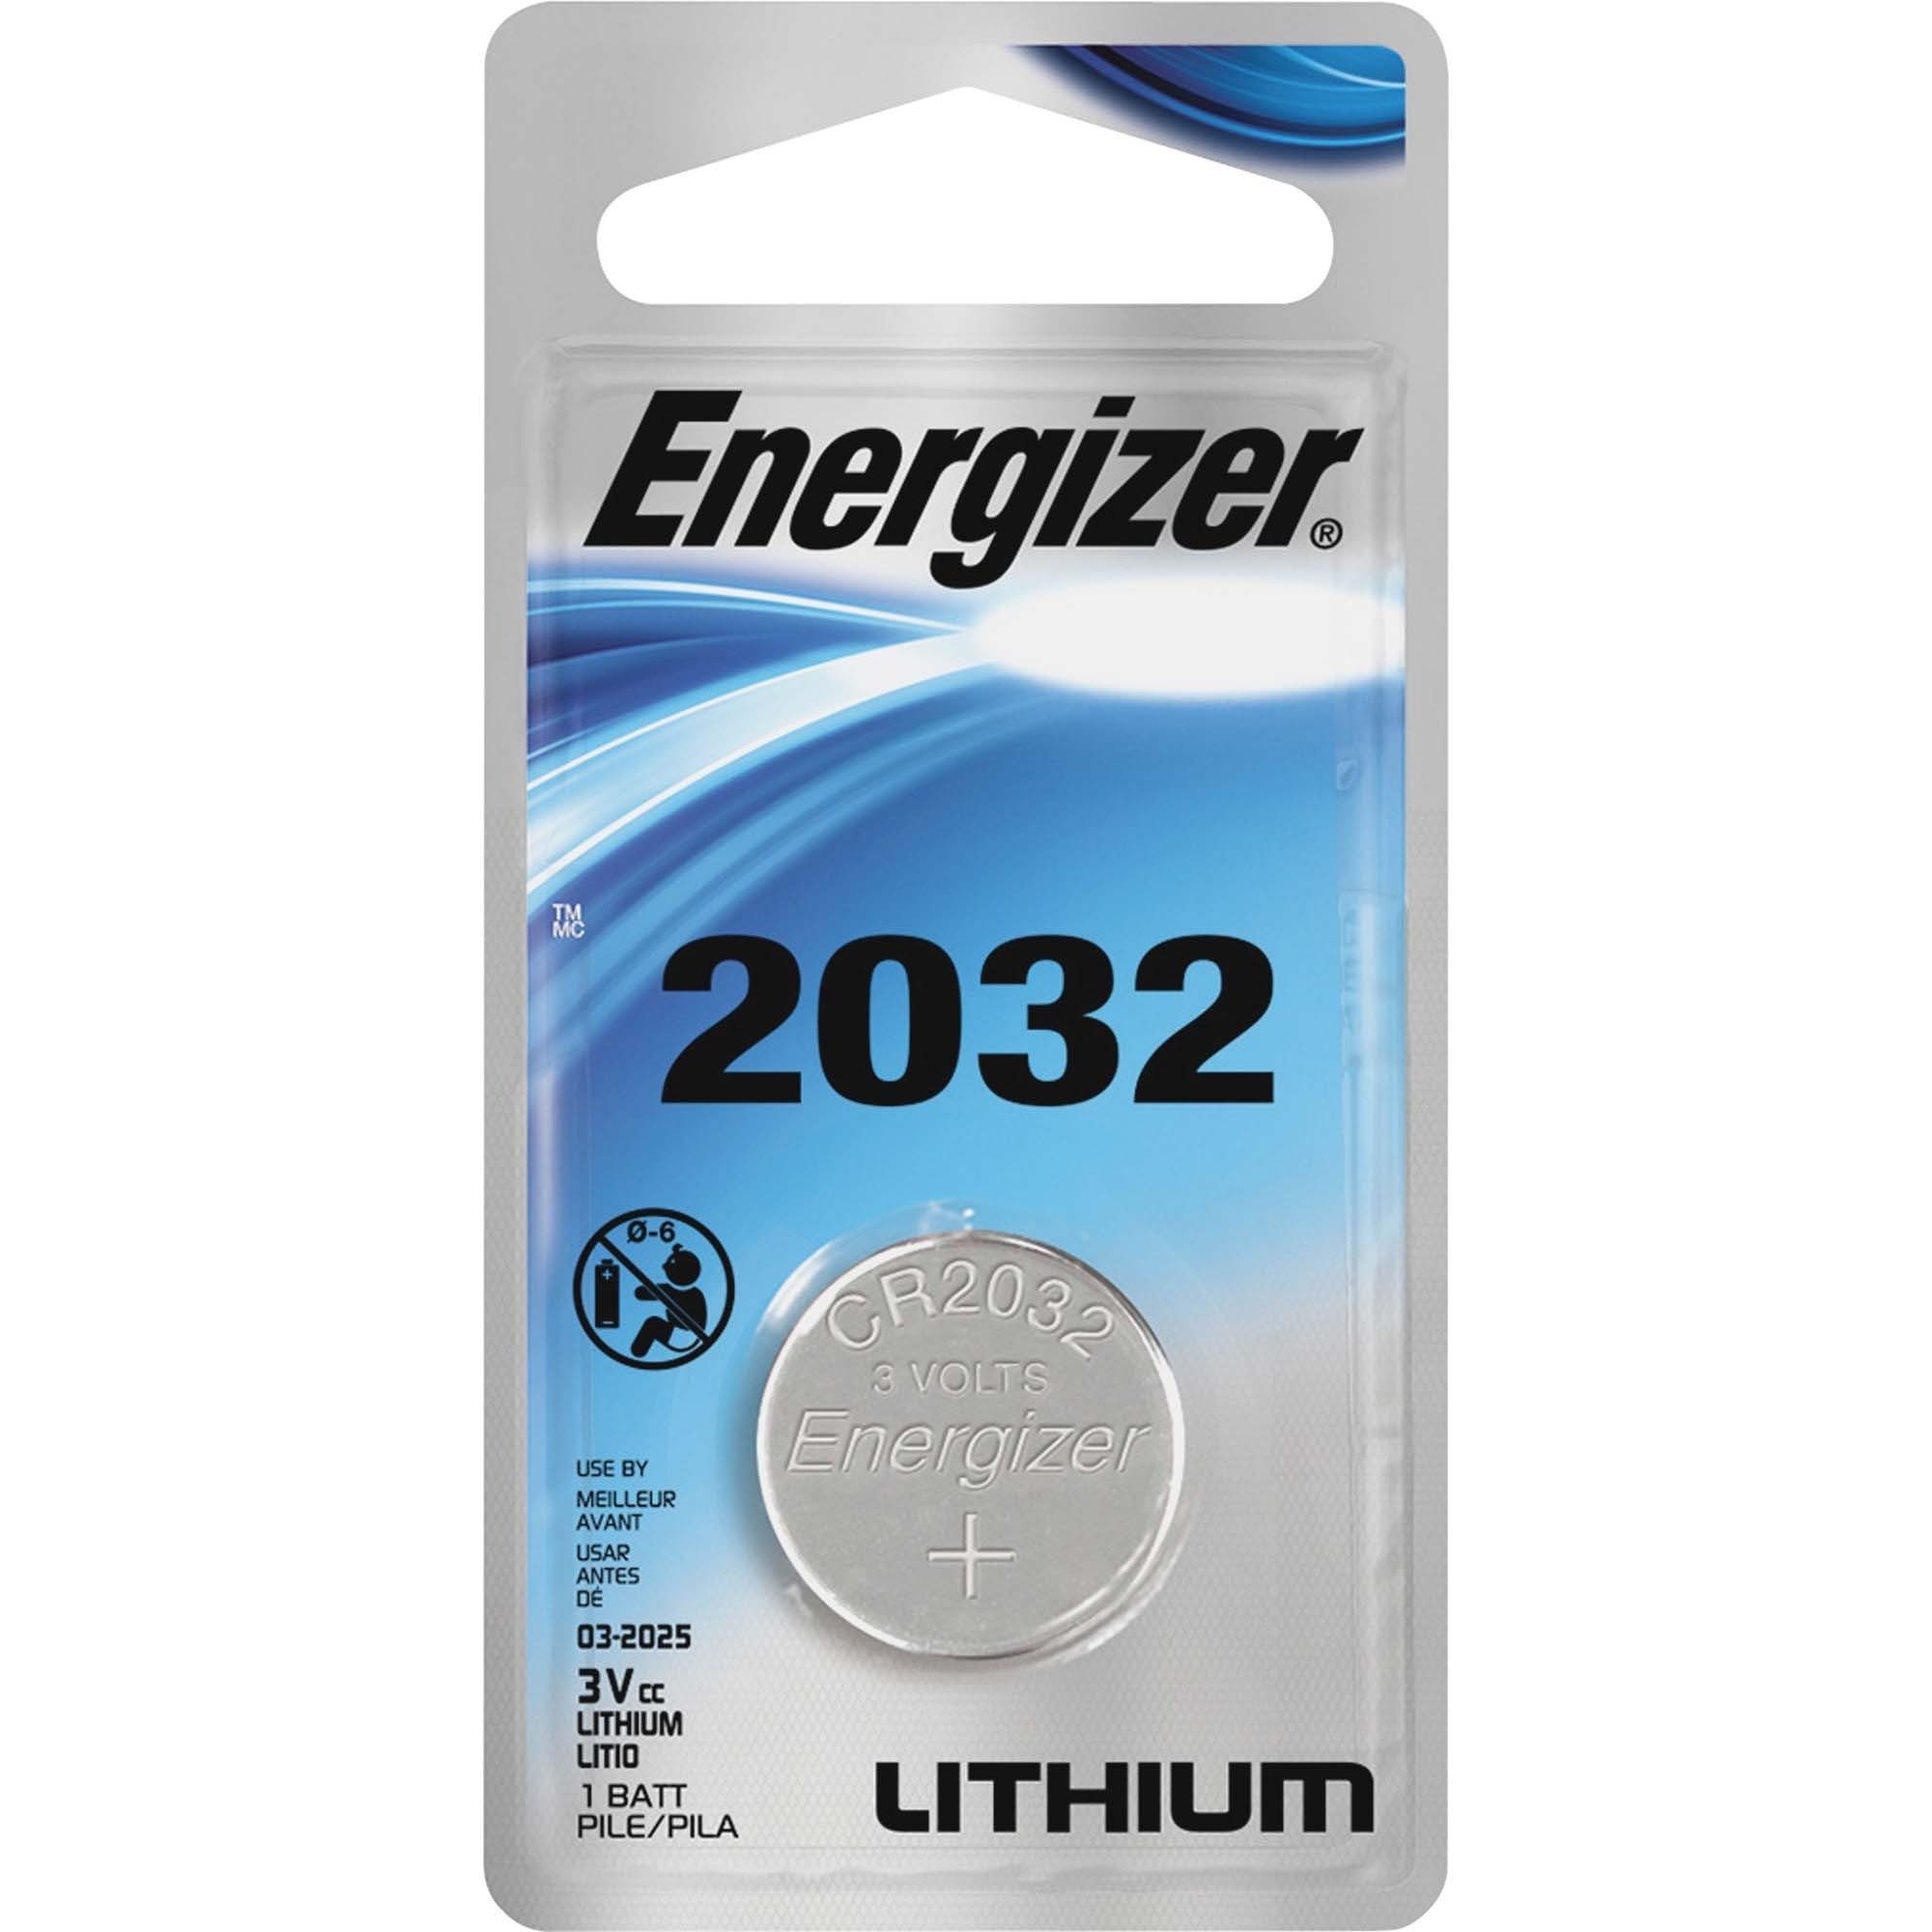 Energizer 2032 3V Watch/Electronic Battery